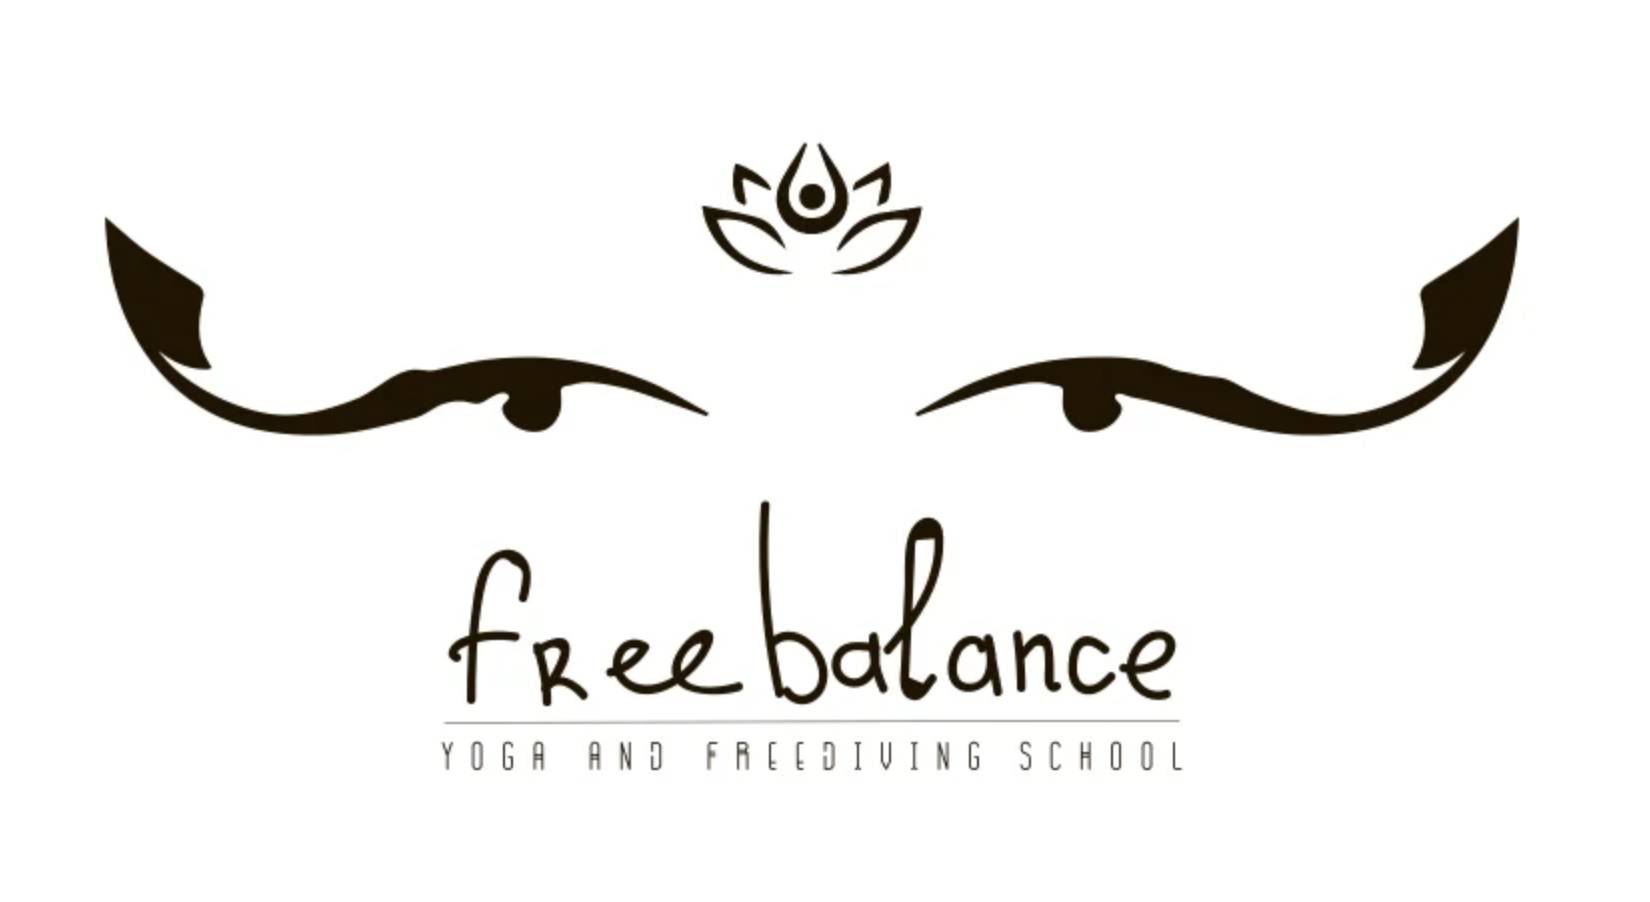 FreeBalance Yoga & Freediving School